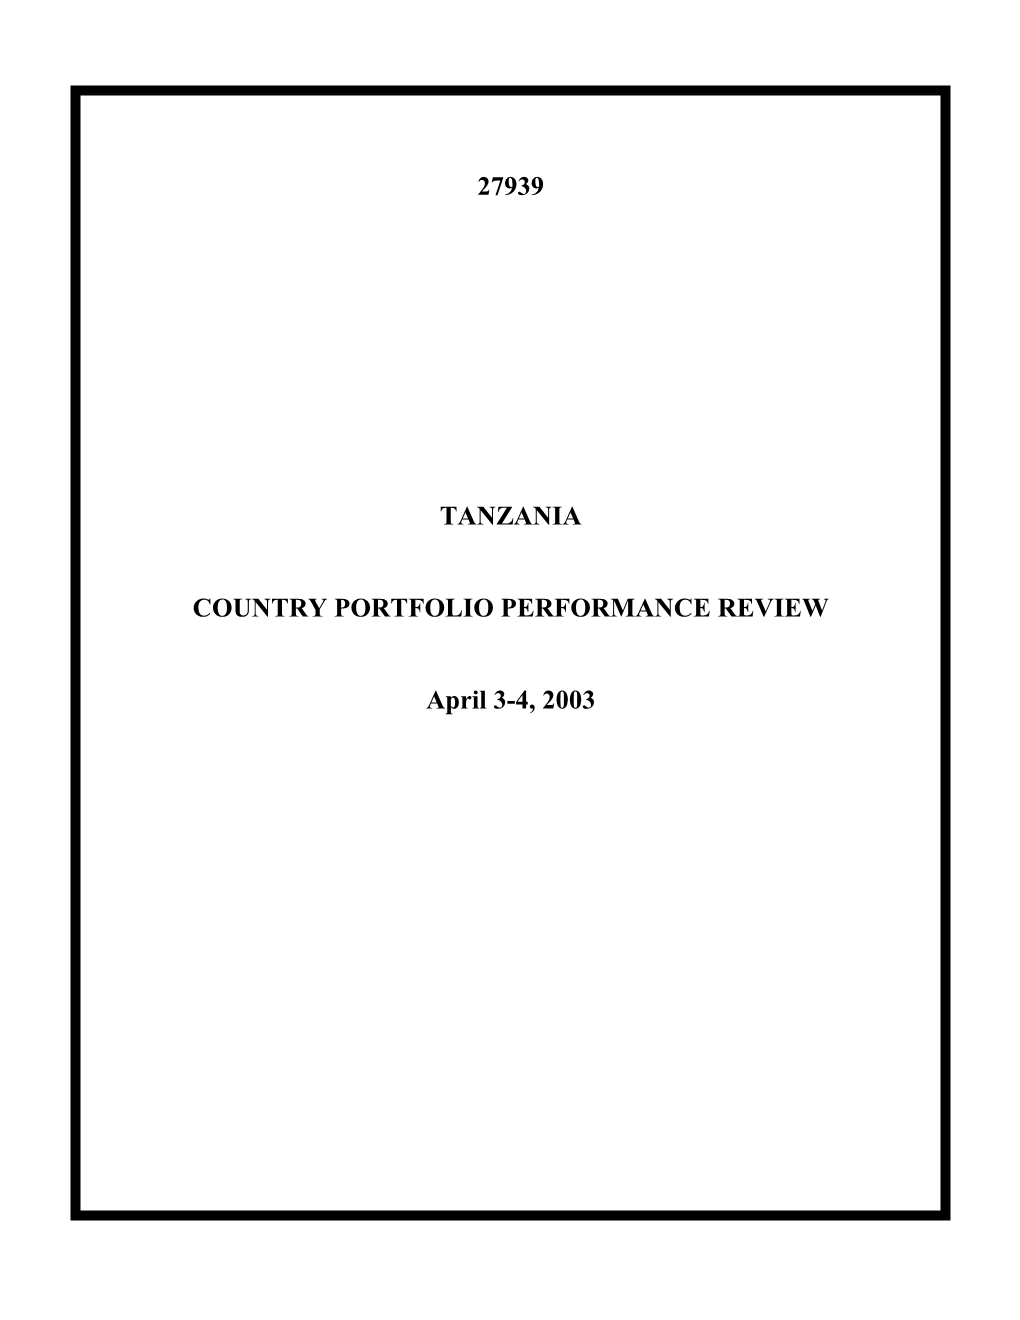 Country Portfolio Performance Review